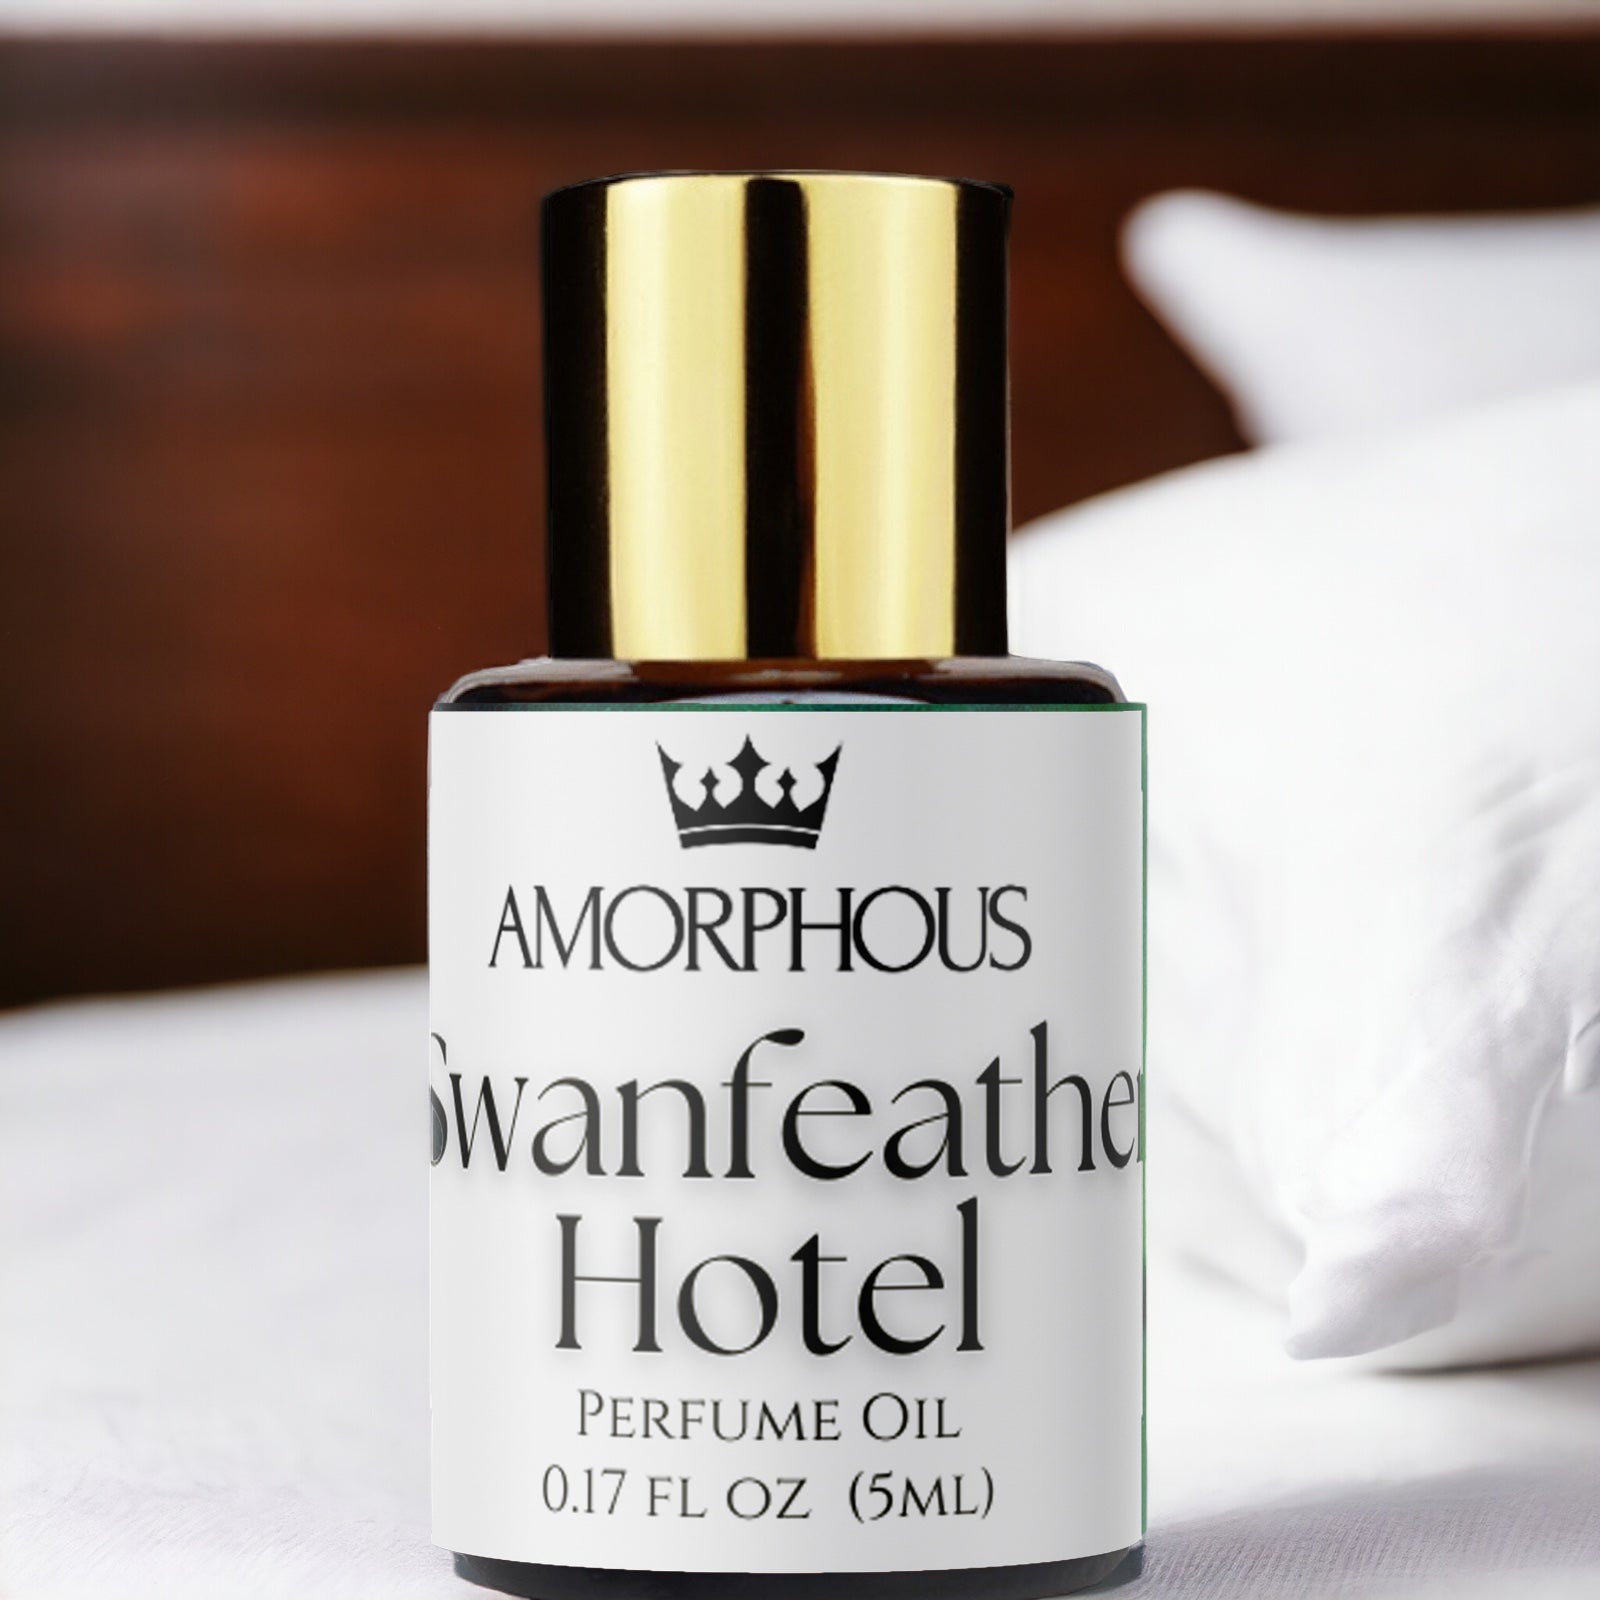 swanfeather hotel perfume